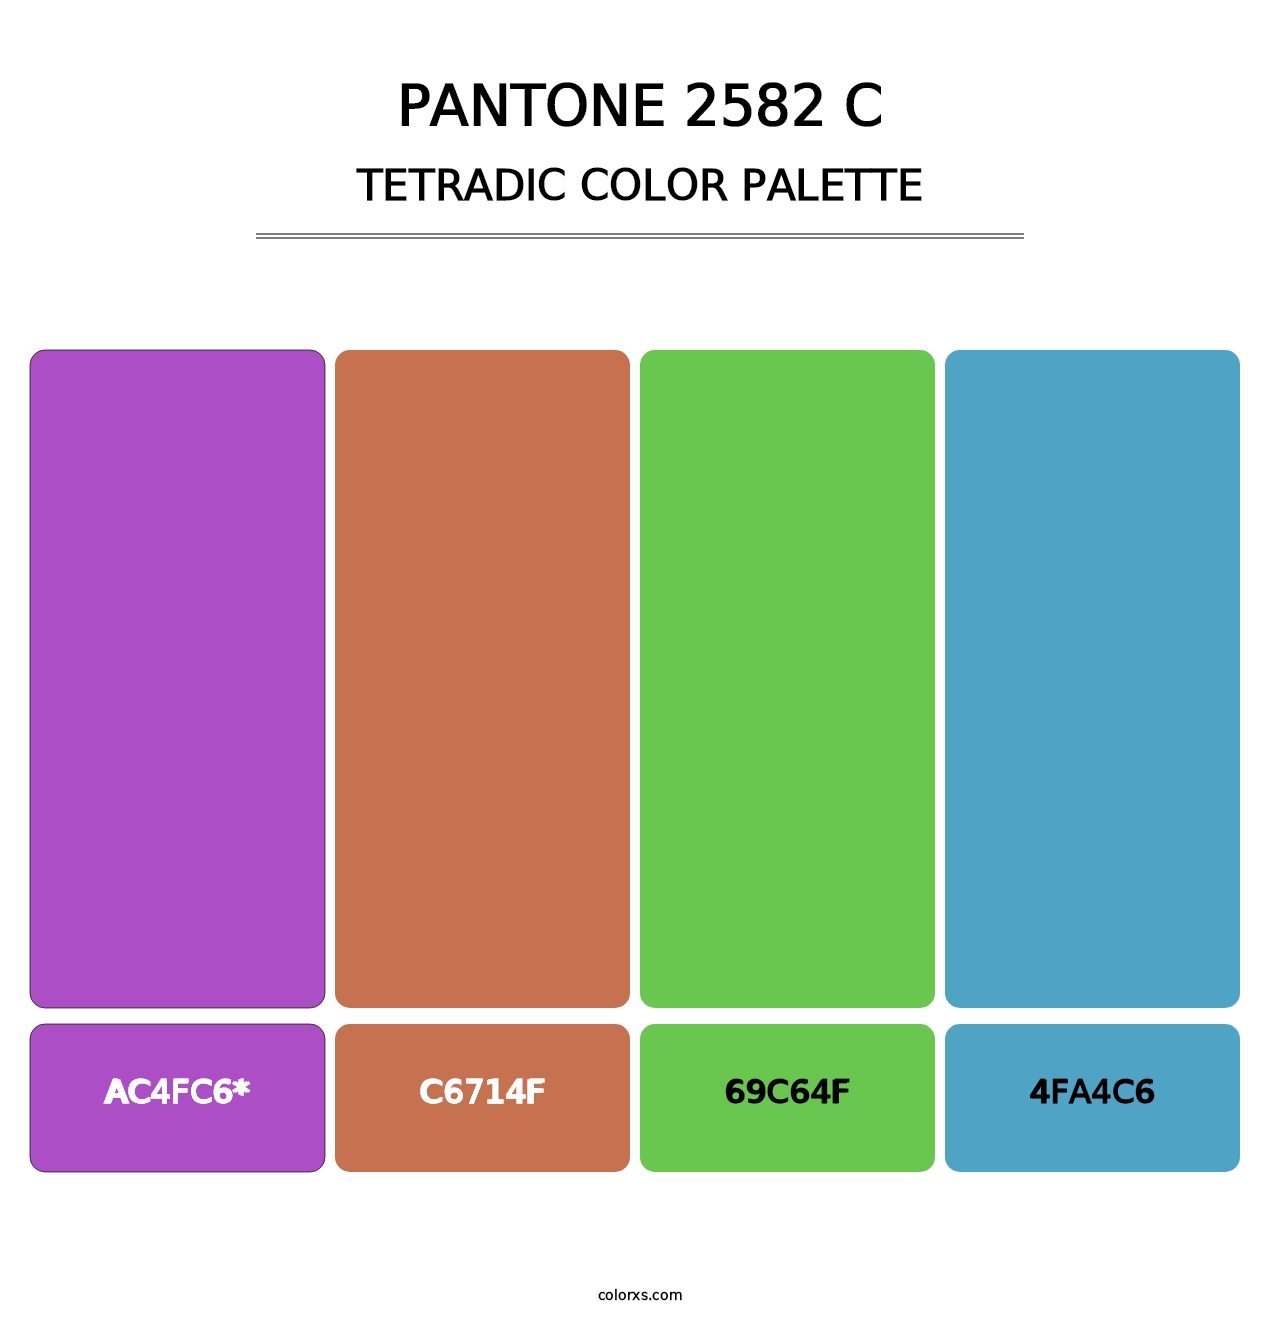 PANTONE 2582 C - Tetradic Color Palette